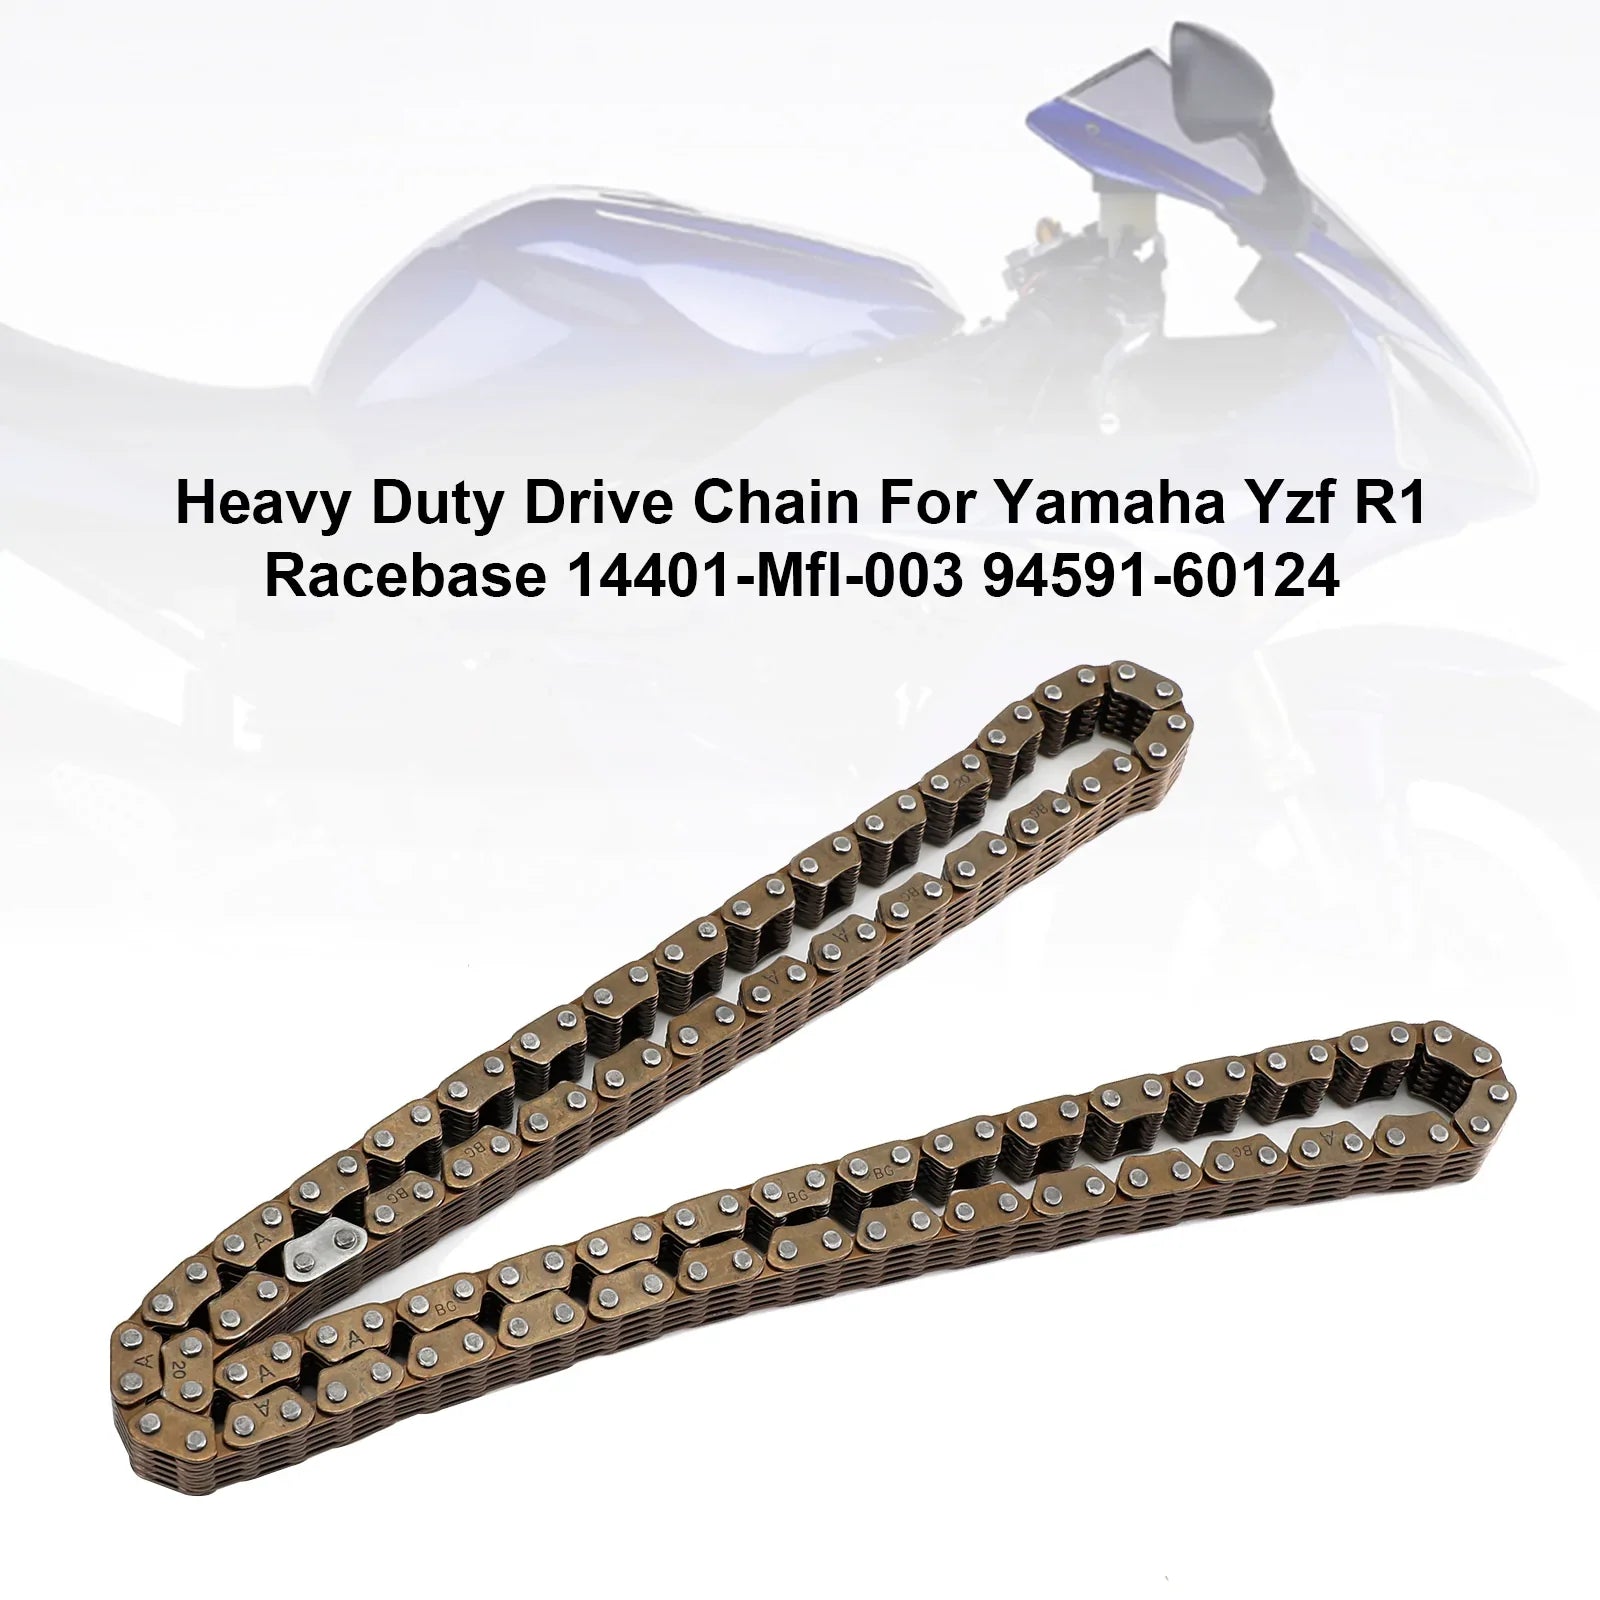 Yamaha Yzf R1 Racebase 14401-Mfl-003 94591-60124 Cadena de distribución resistente